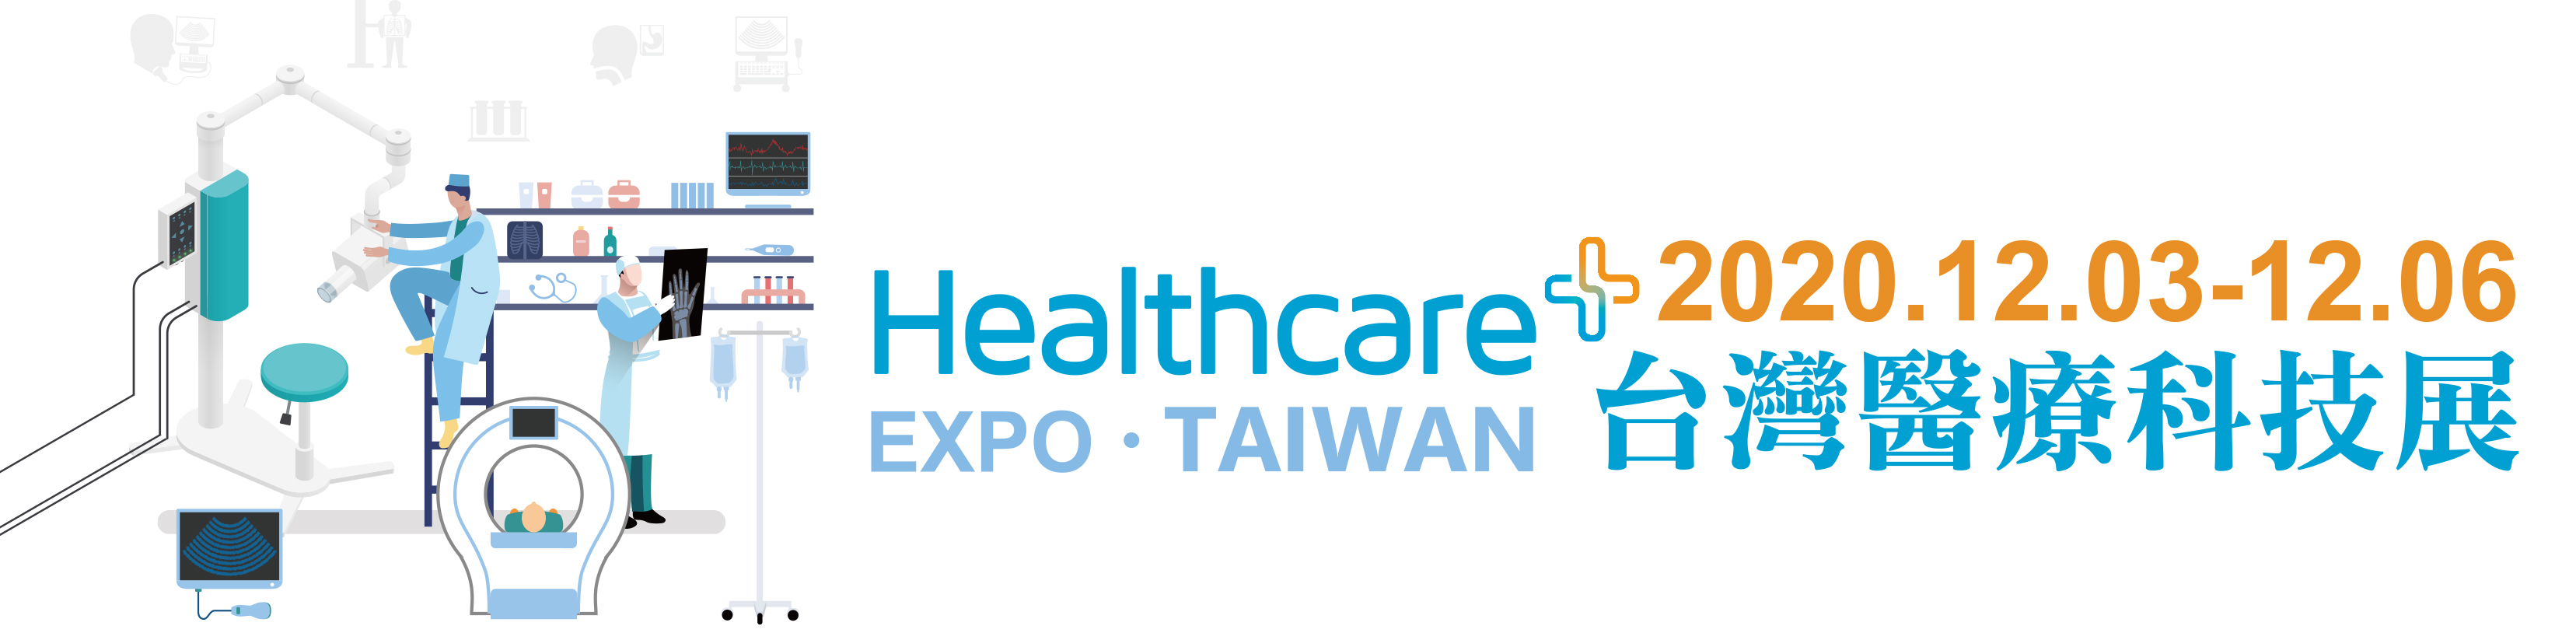 Healthcare EXPO. TAIWAN 2020